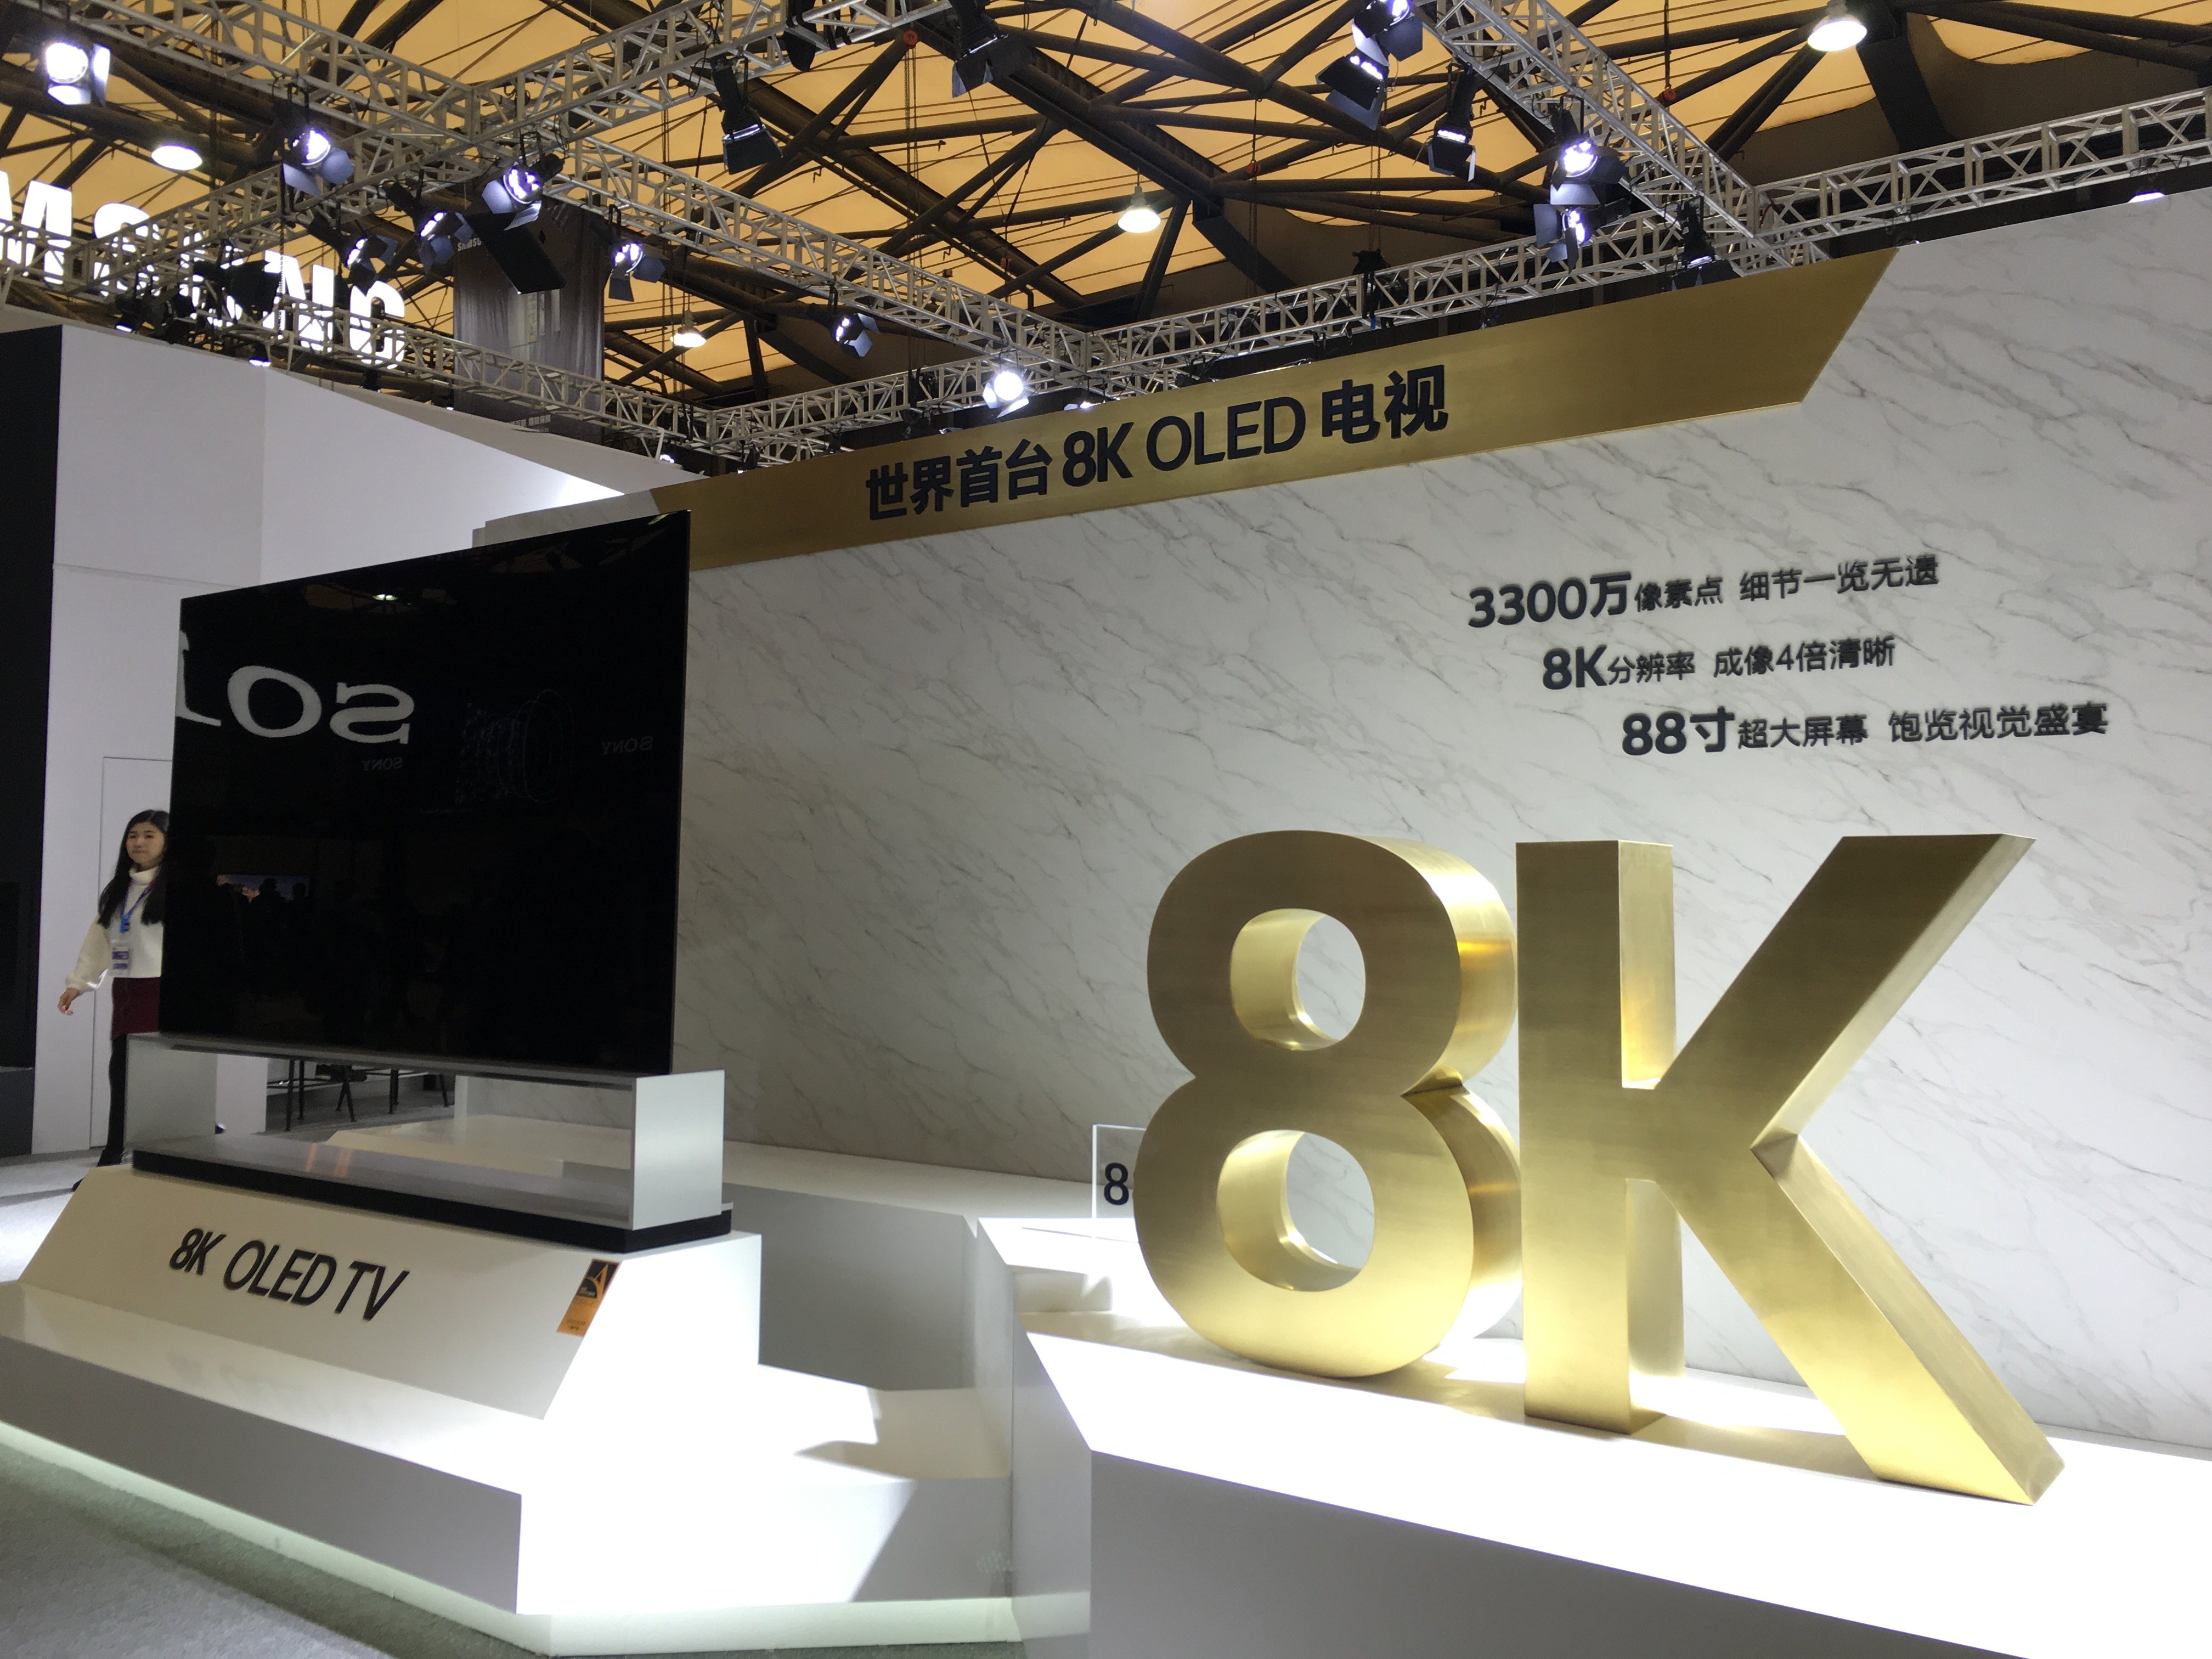 8K电视再次获奖 东奥会将推动8K影像产业发展